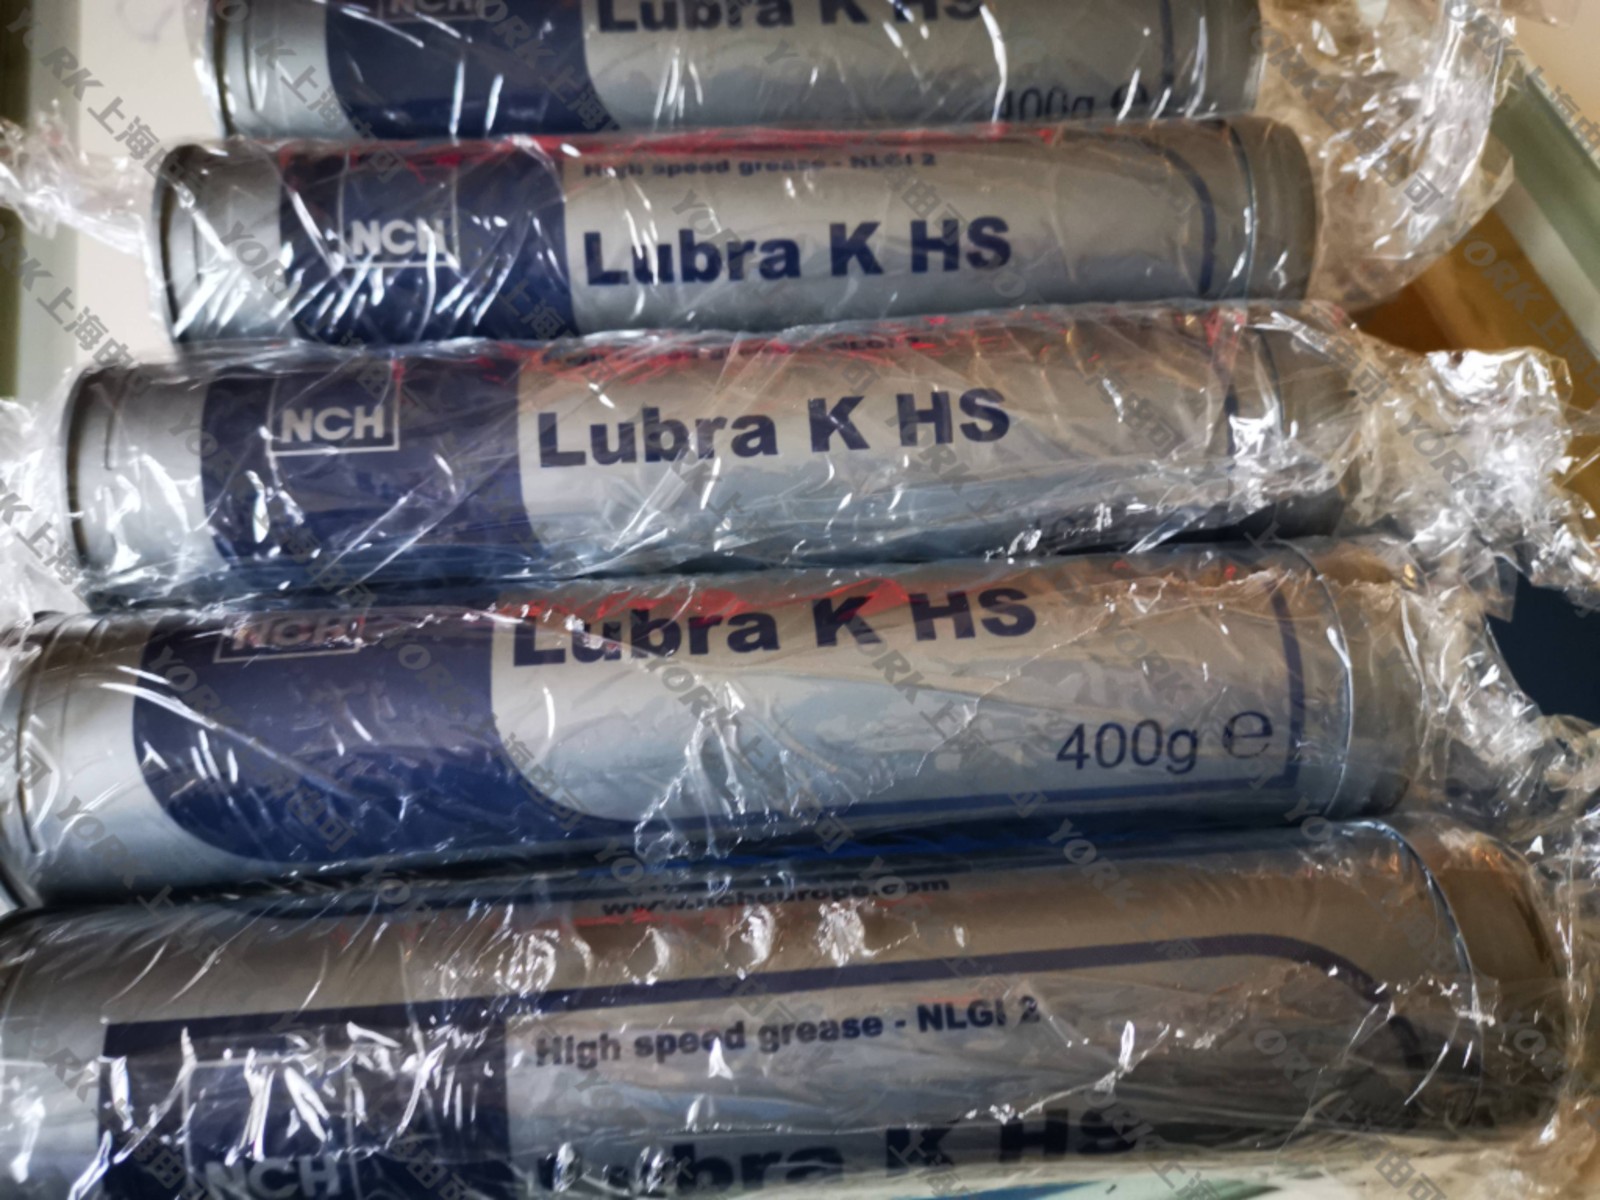 Kernite LUBRA K HS 有機鉬高速潤滑脂